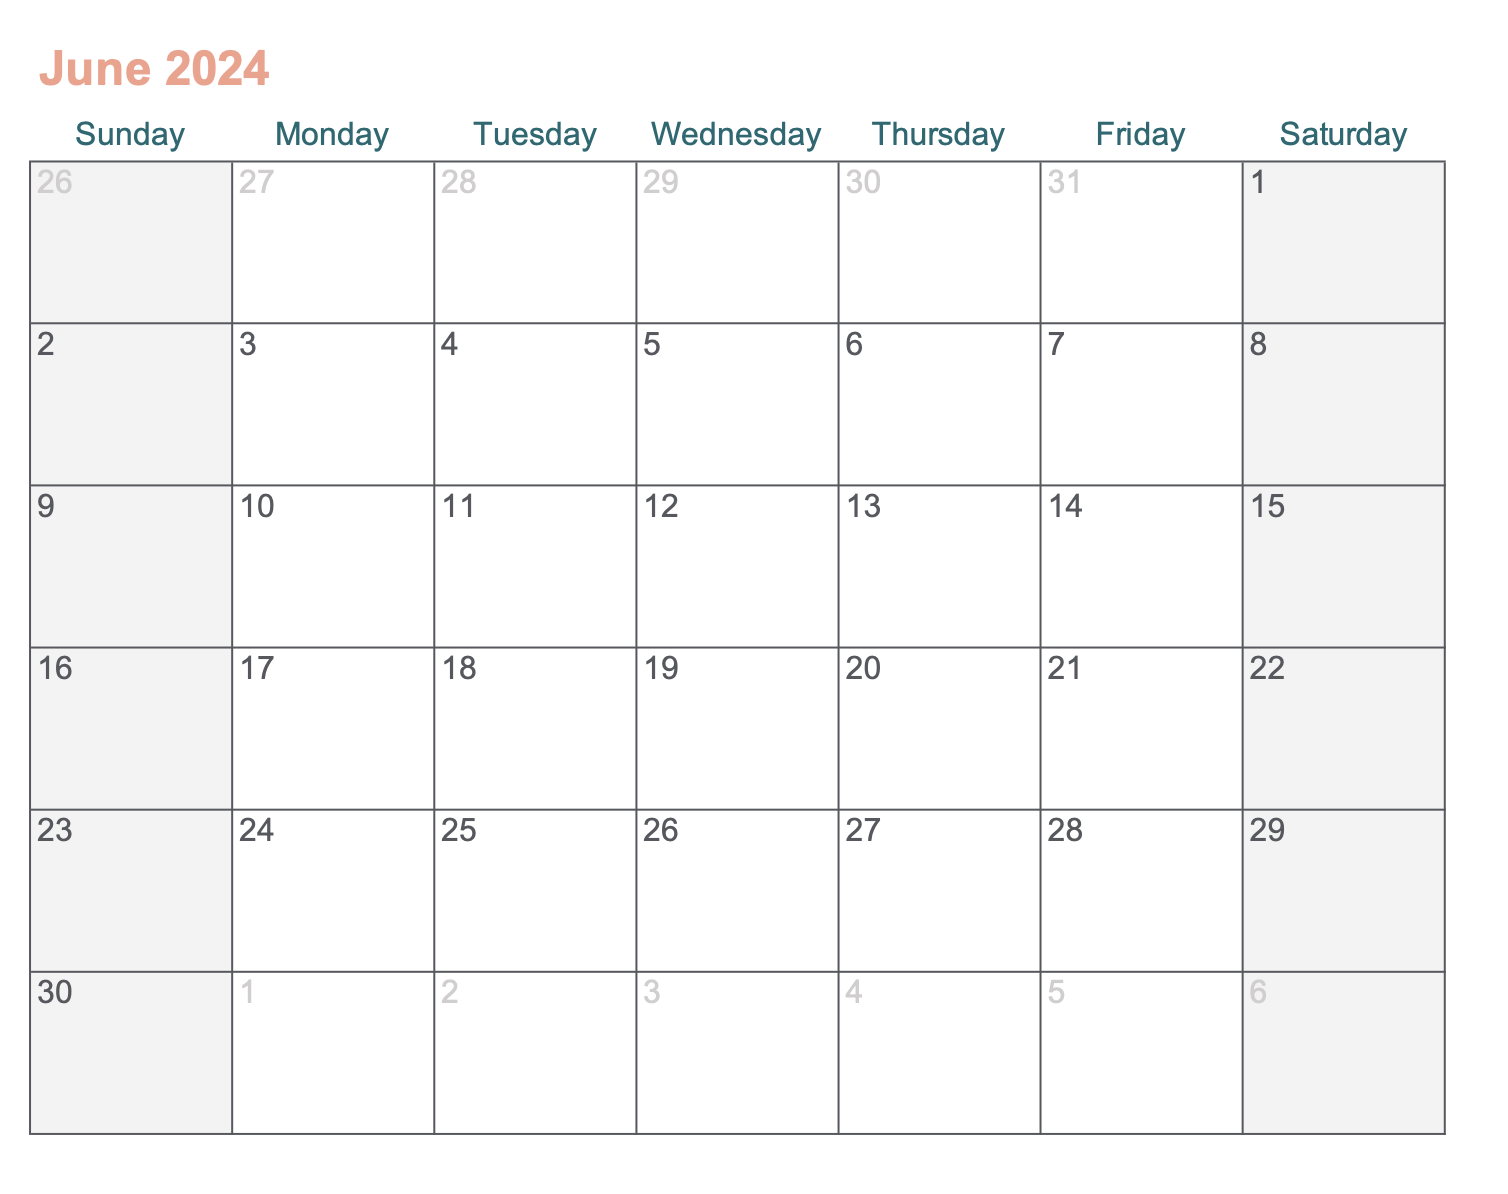 June 2024 Printable Calendar With Excel - Agendrix inside June 2024 Excel Calendar